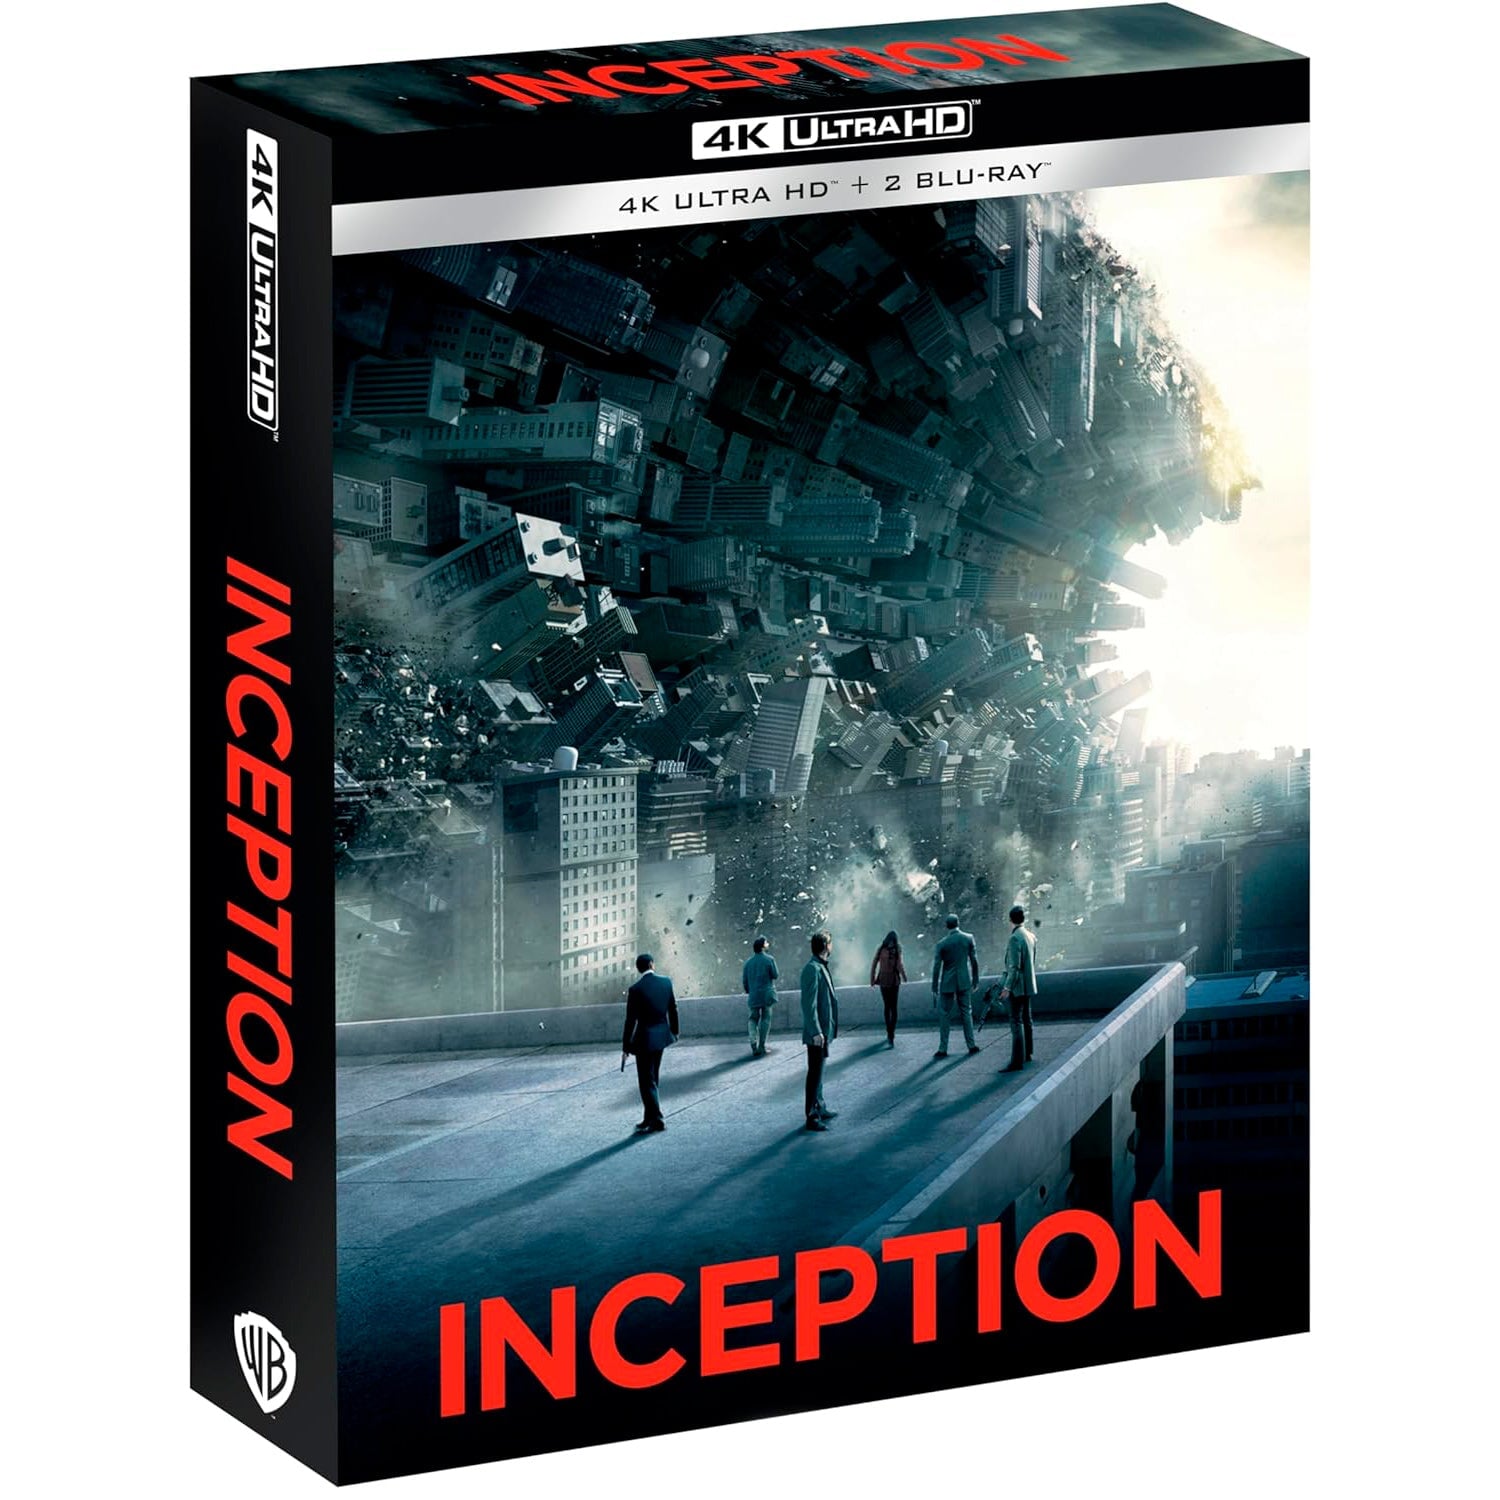 Начало (2010) (4K UHD + 2 Blu-ray) Ultimate Collectors Edition Steelbook